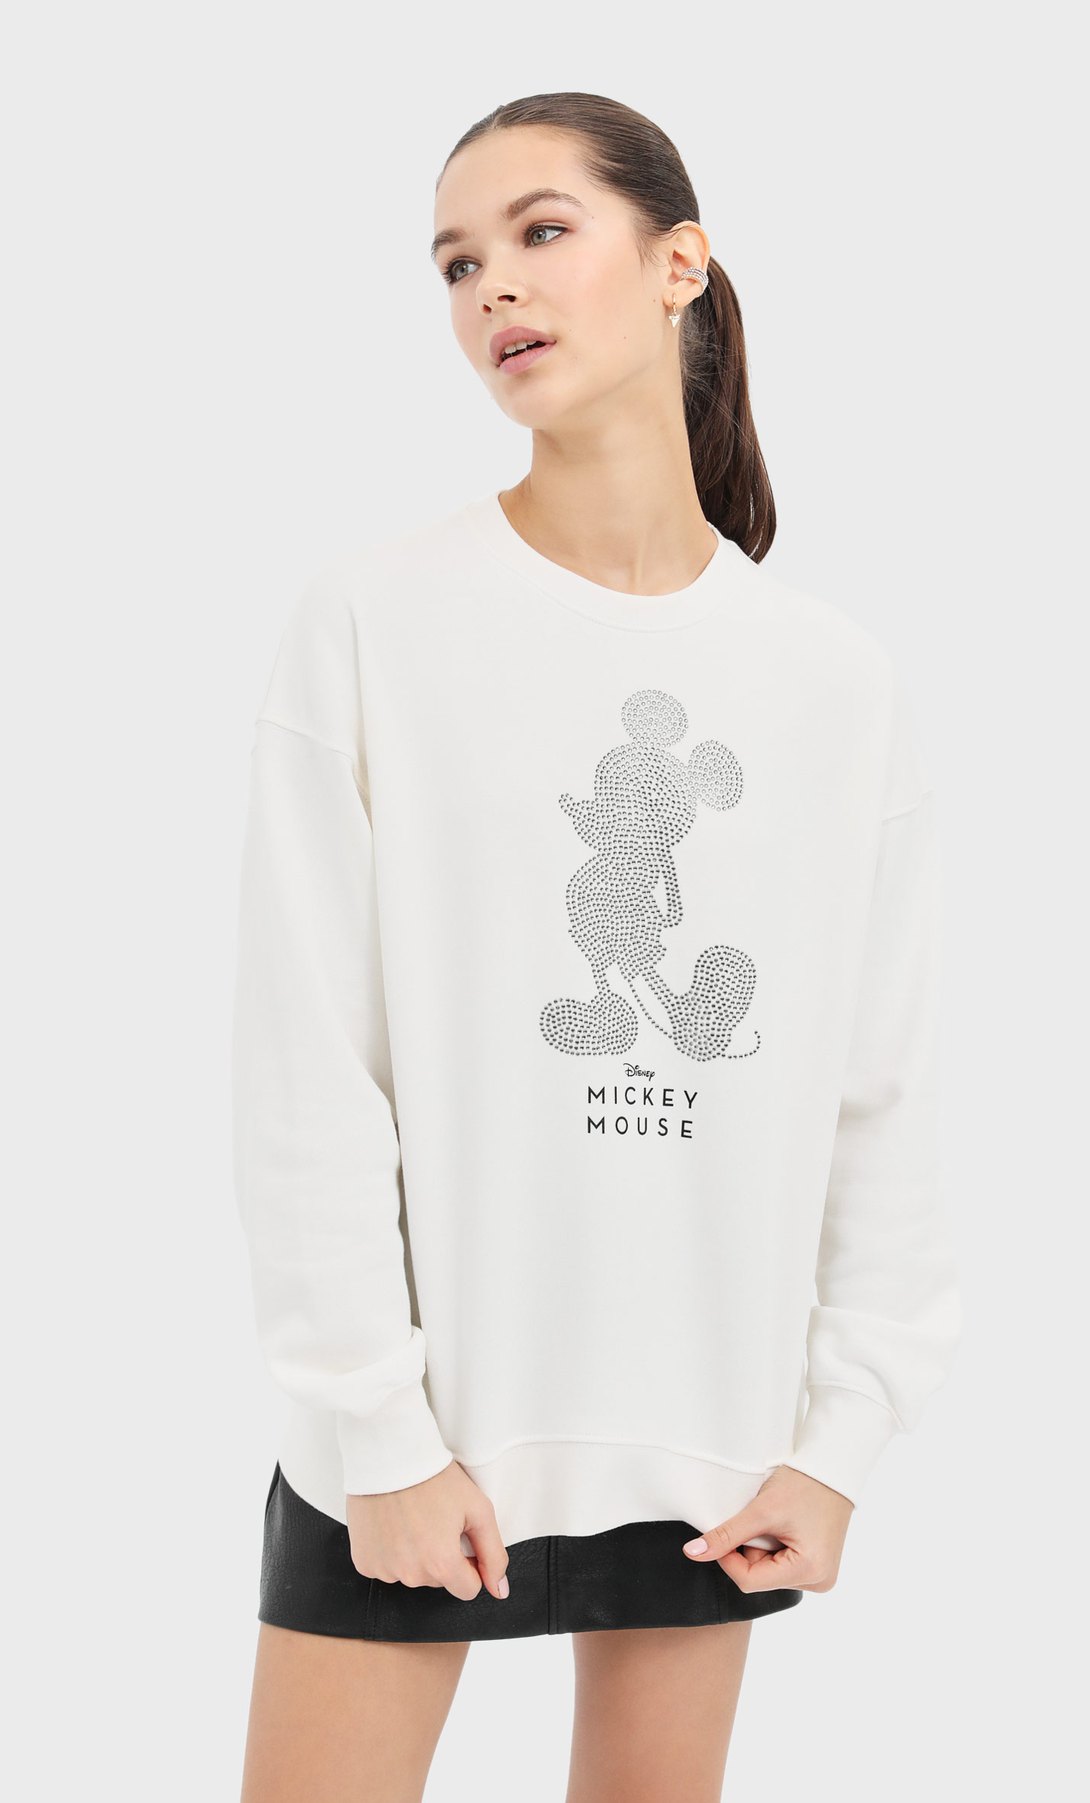 giratorio bronce toxicidad Camiseta Mickey Mouse Mujer Stradivarius Clearance - deportesinc.com  1688489832